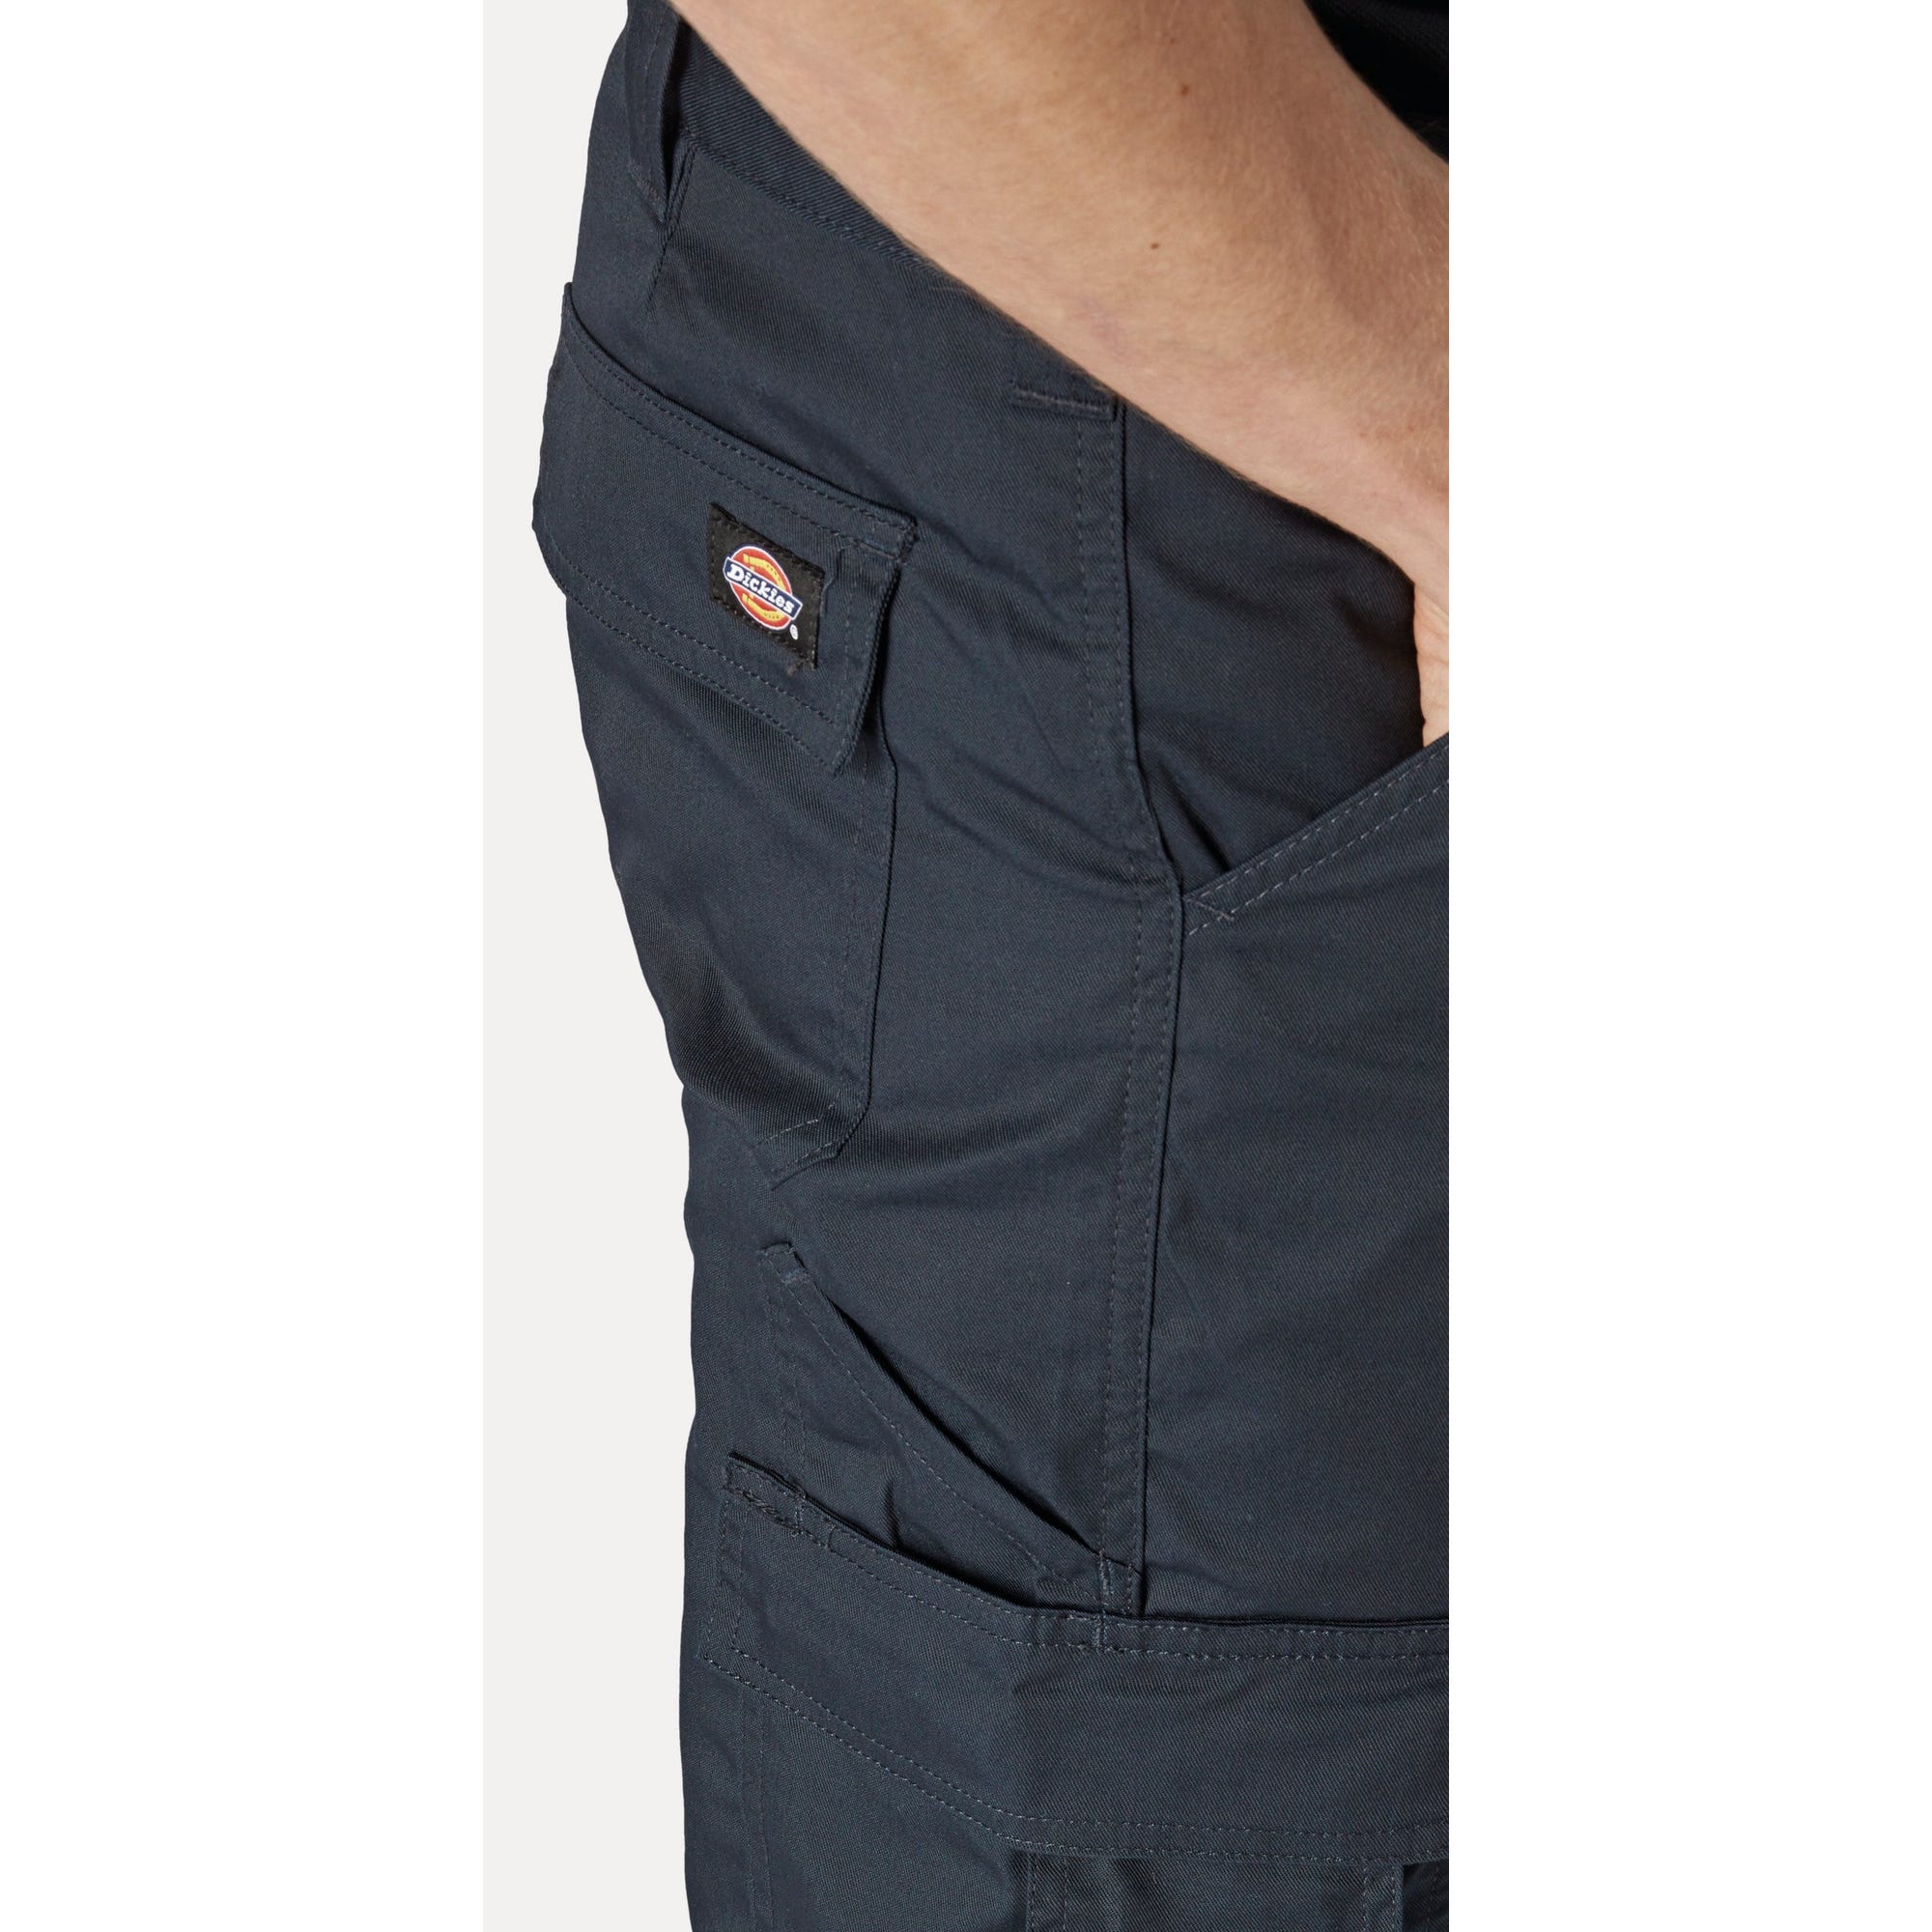 Pantalon Everyday Kaki et noir- Dickies - Taille 52 8